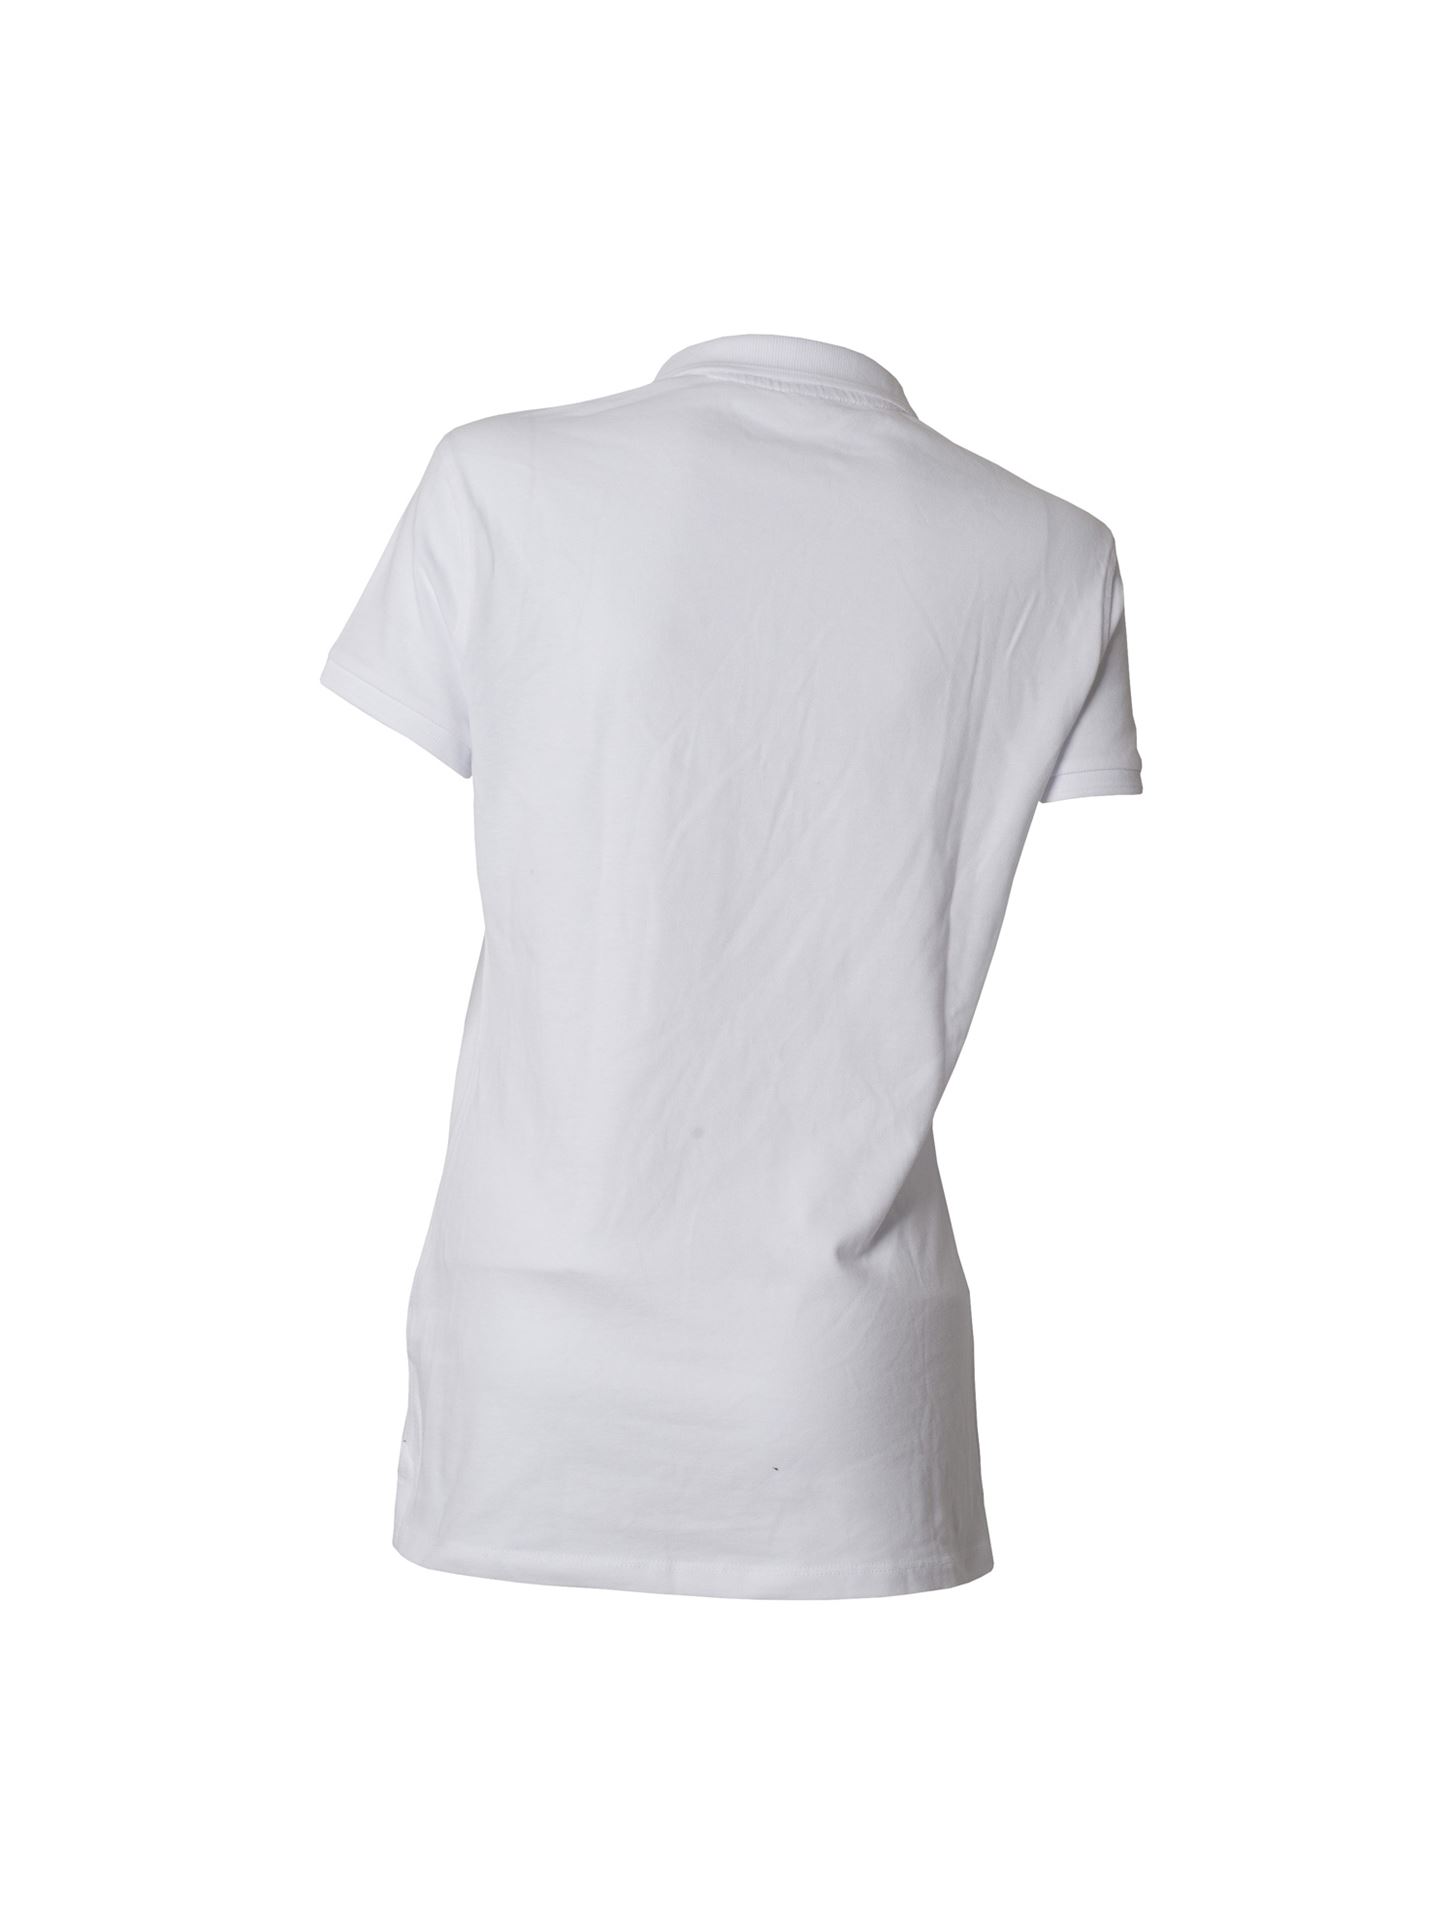 womens white cotton polo shirts